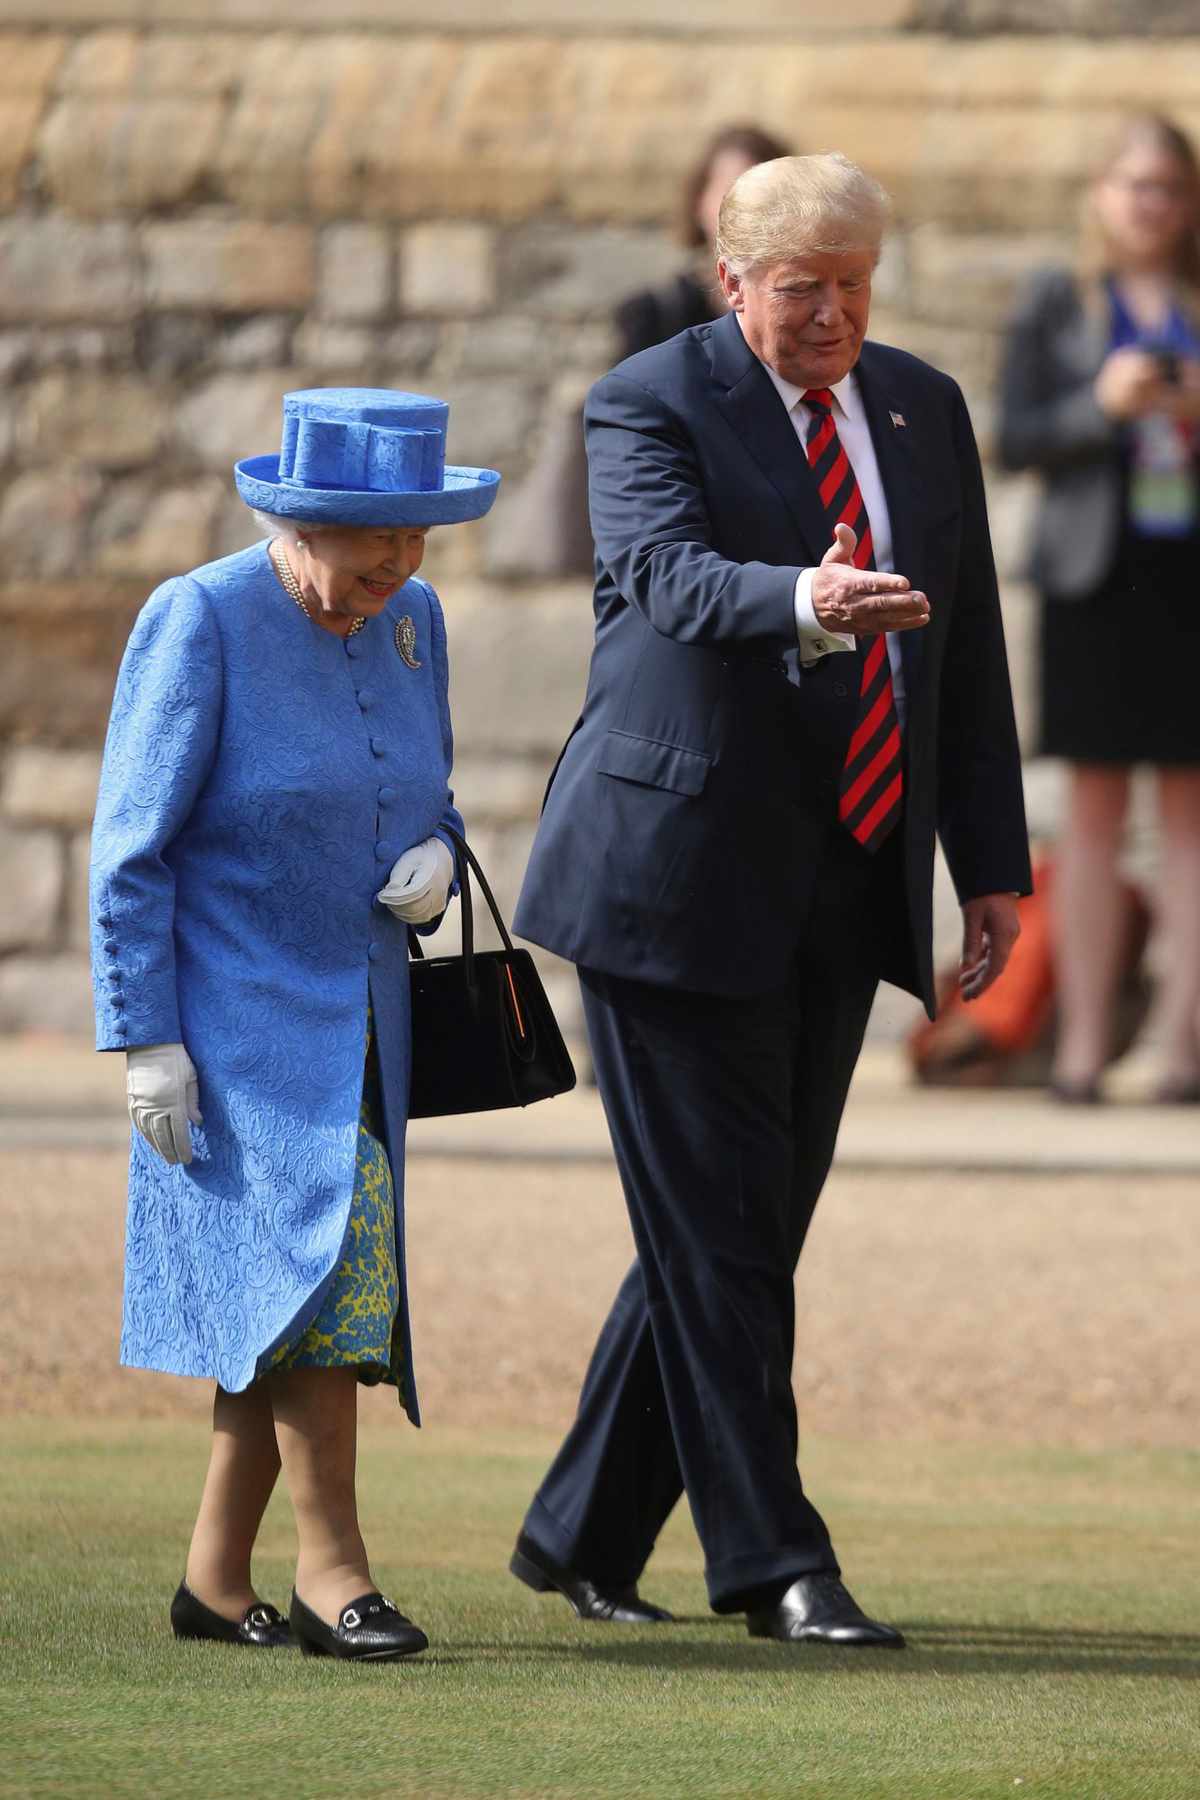 Queen Elizabeth and Donald Trump